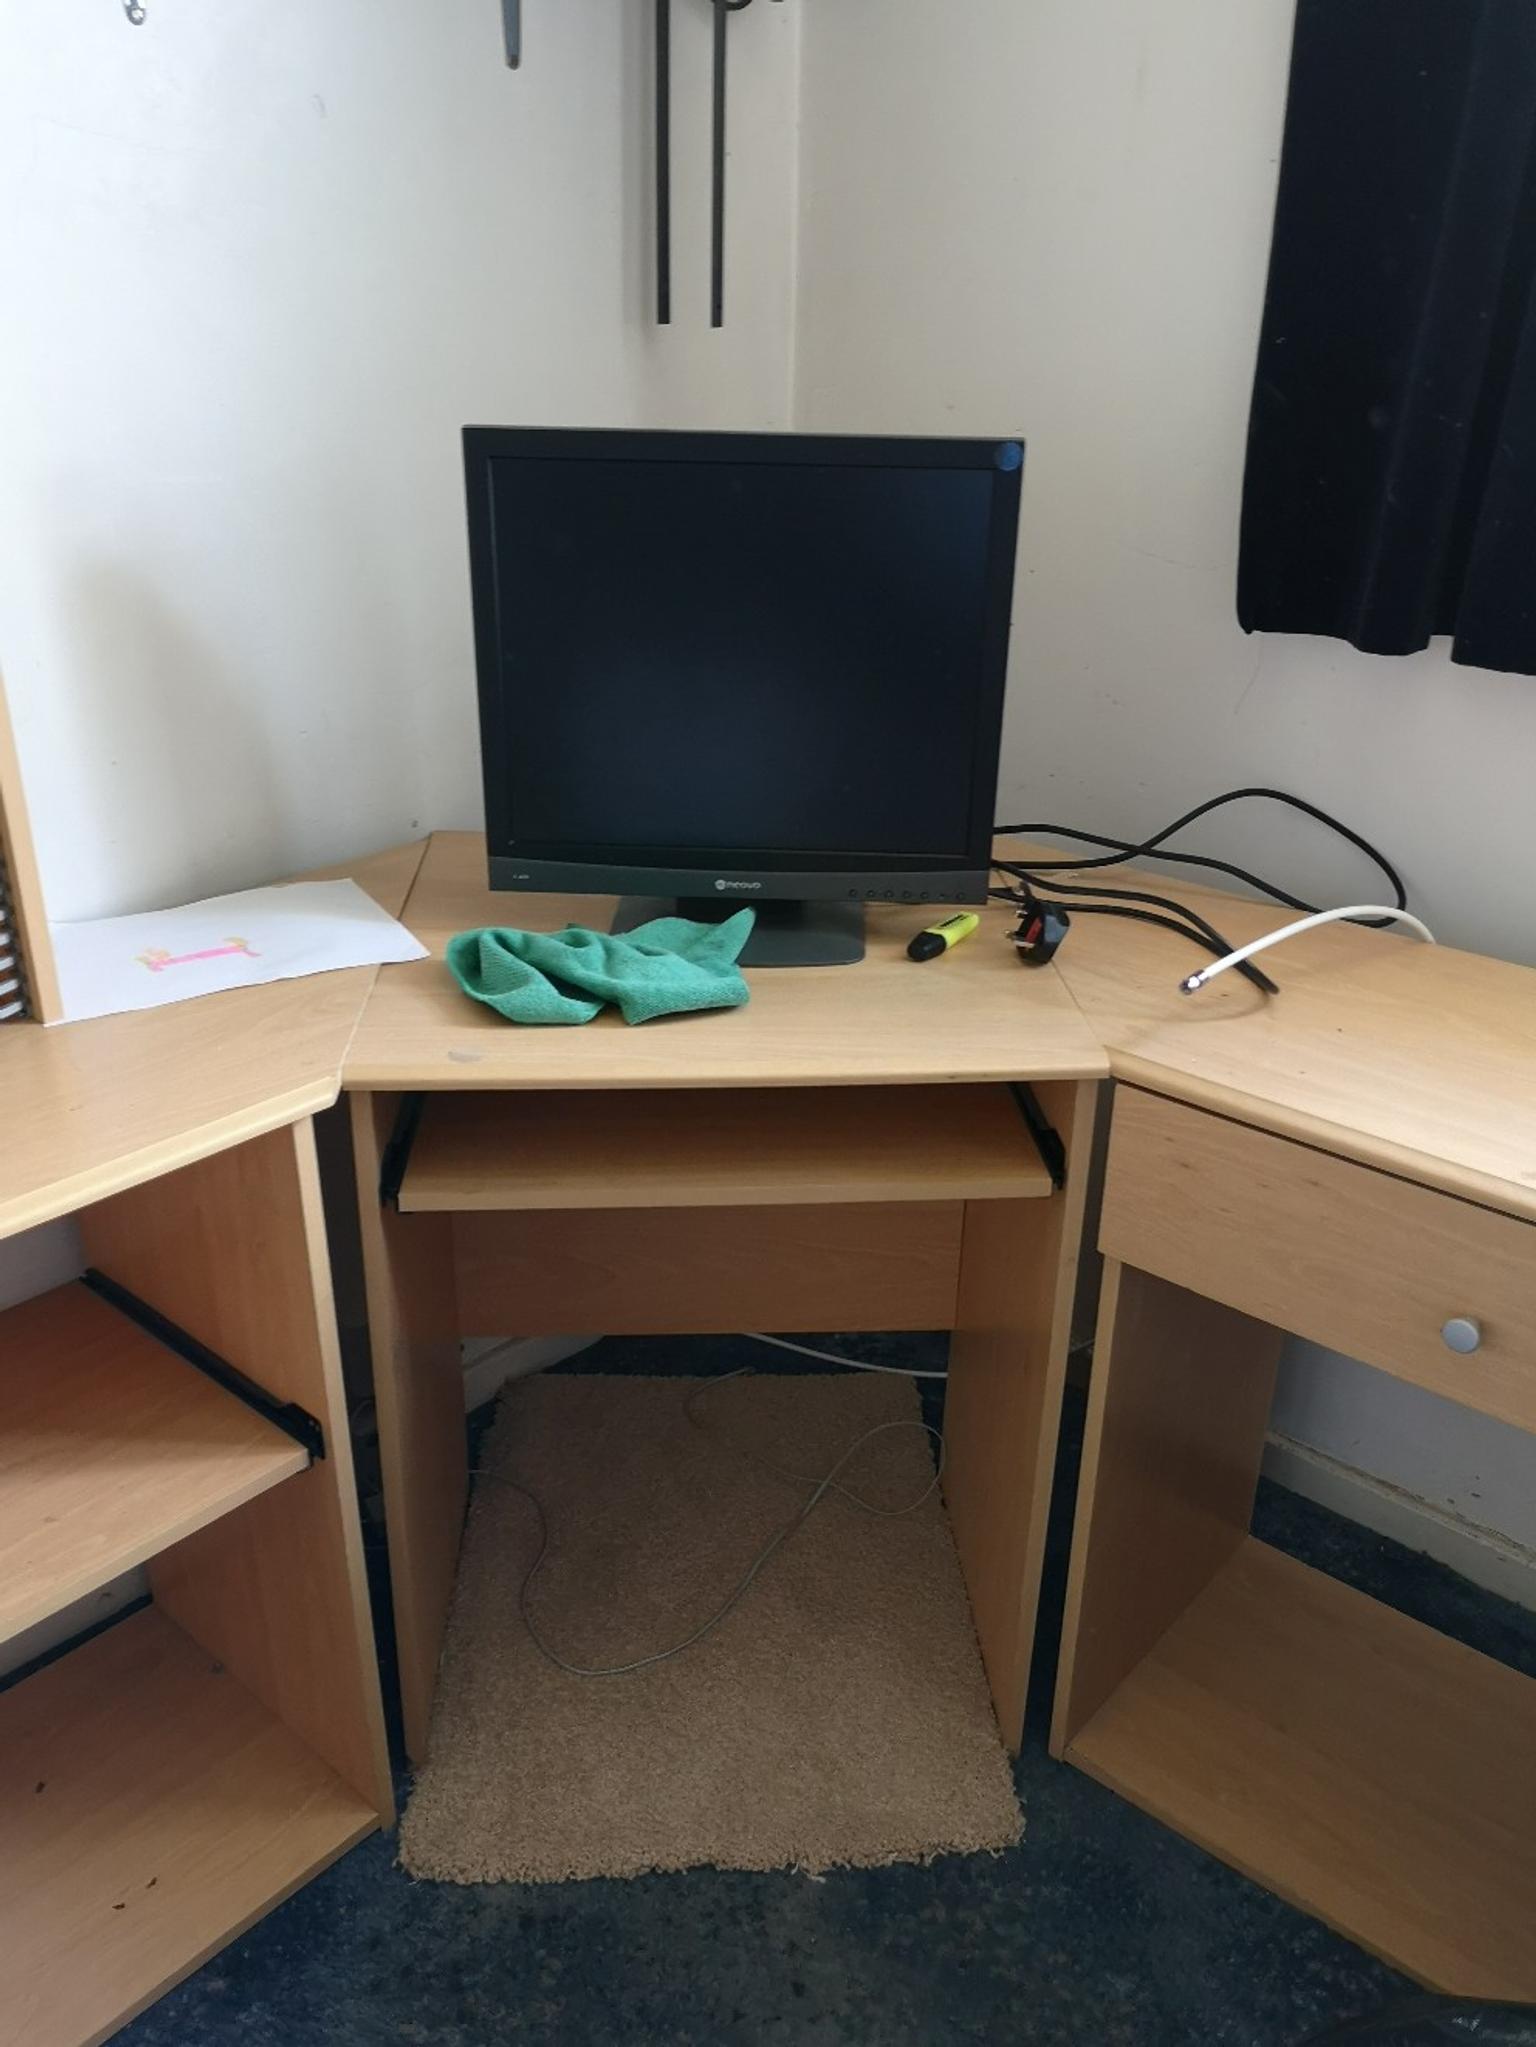 Home Office Computer Desk Units X 5 In Dy2 Dudley Fur 60 00 Zum